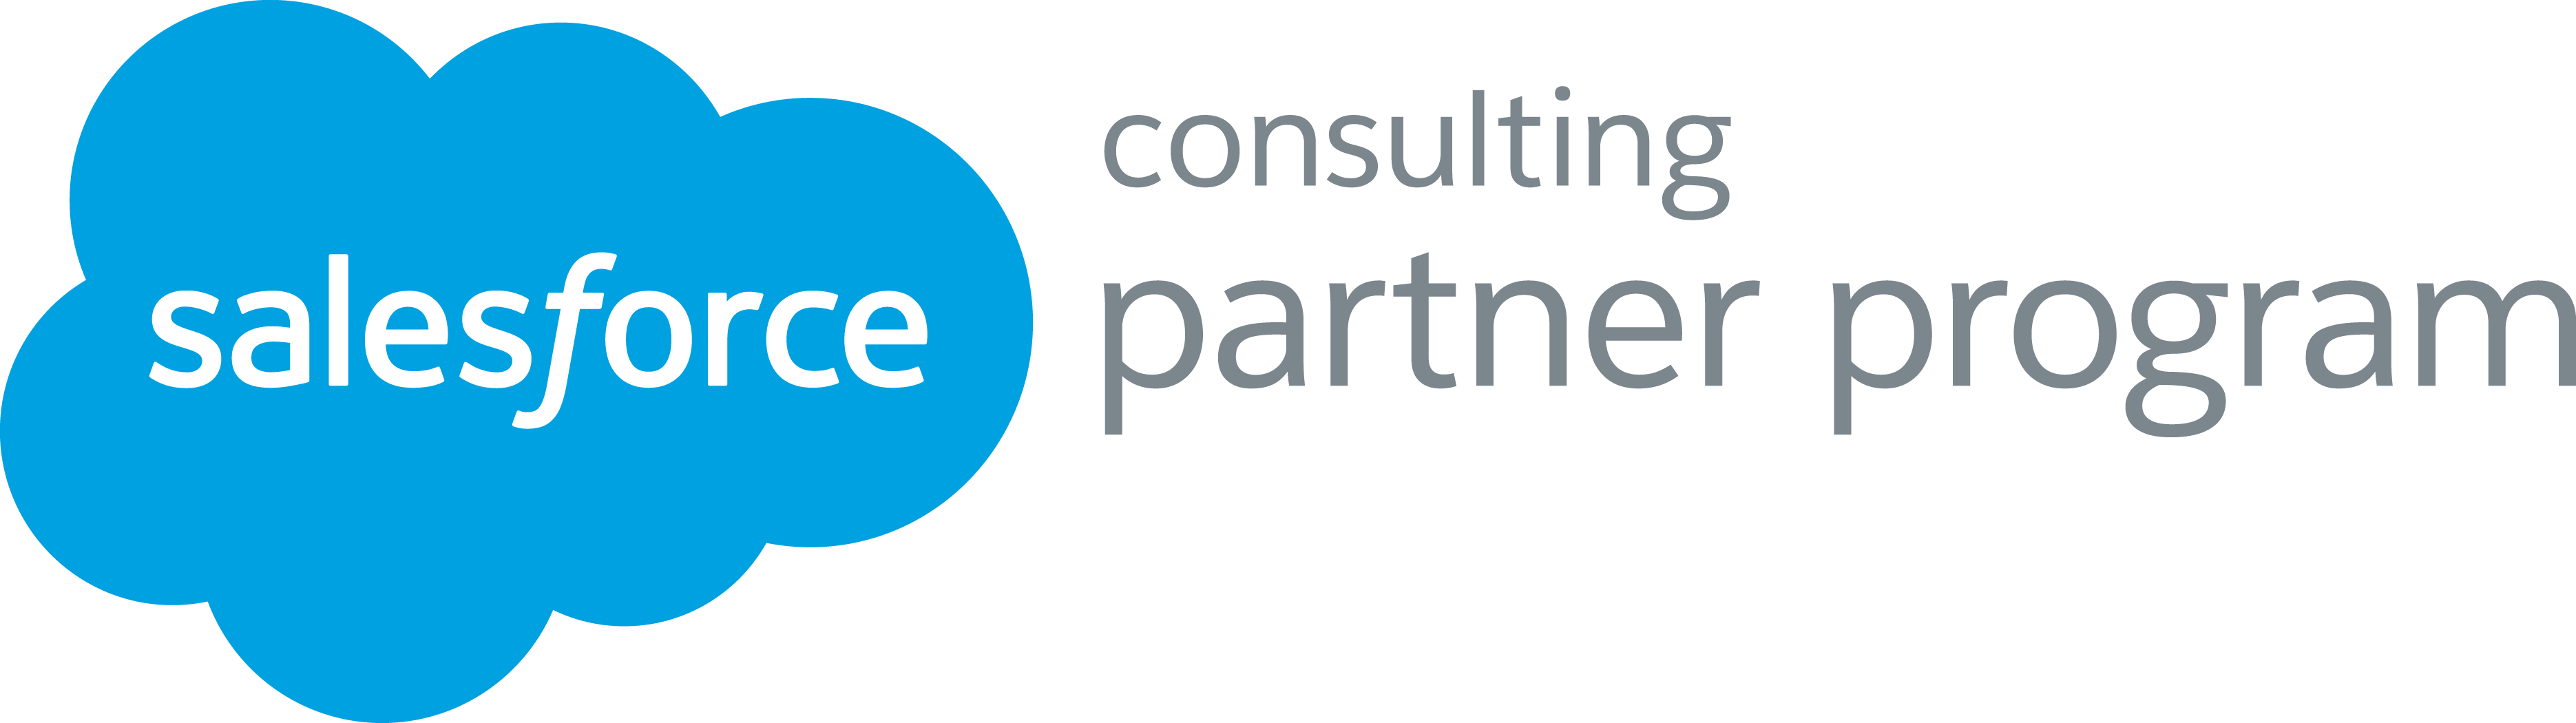 2015sf_Partner_ConsultingPartnerProgram_logo_RGB.png